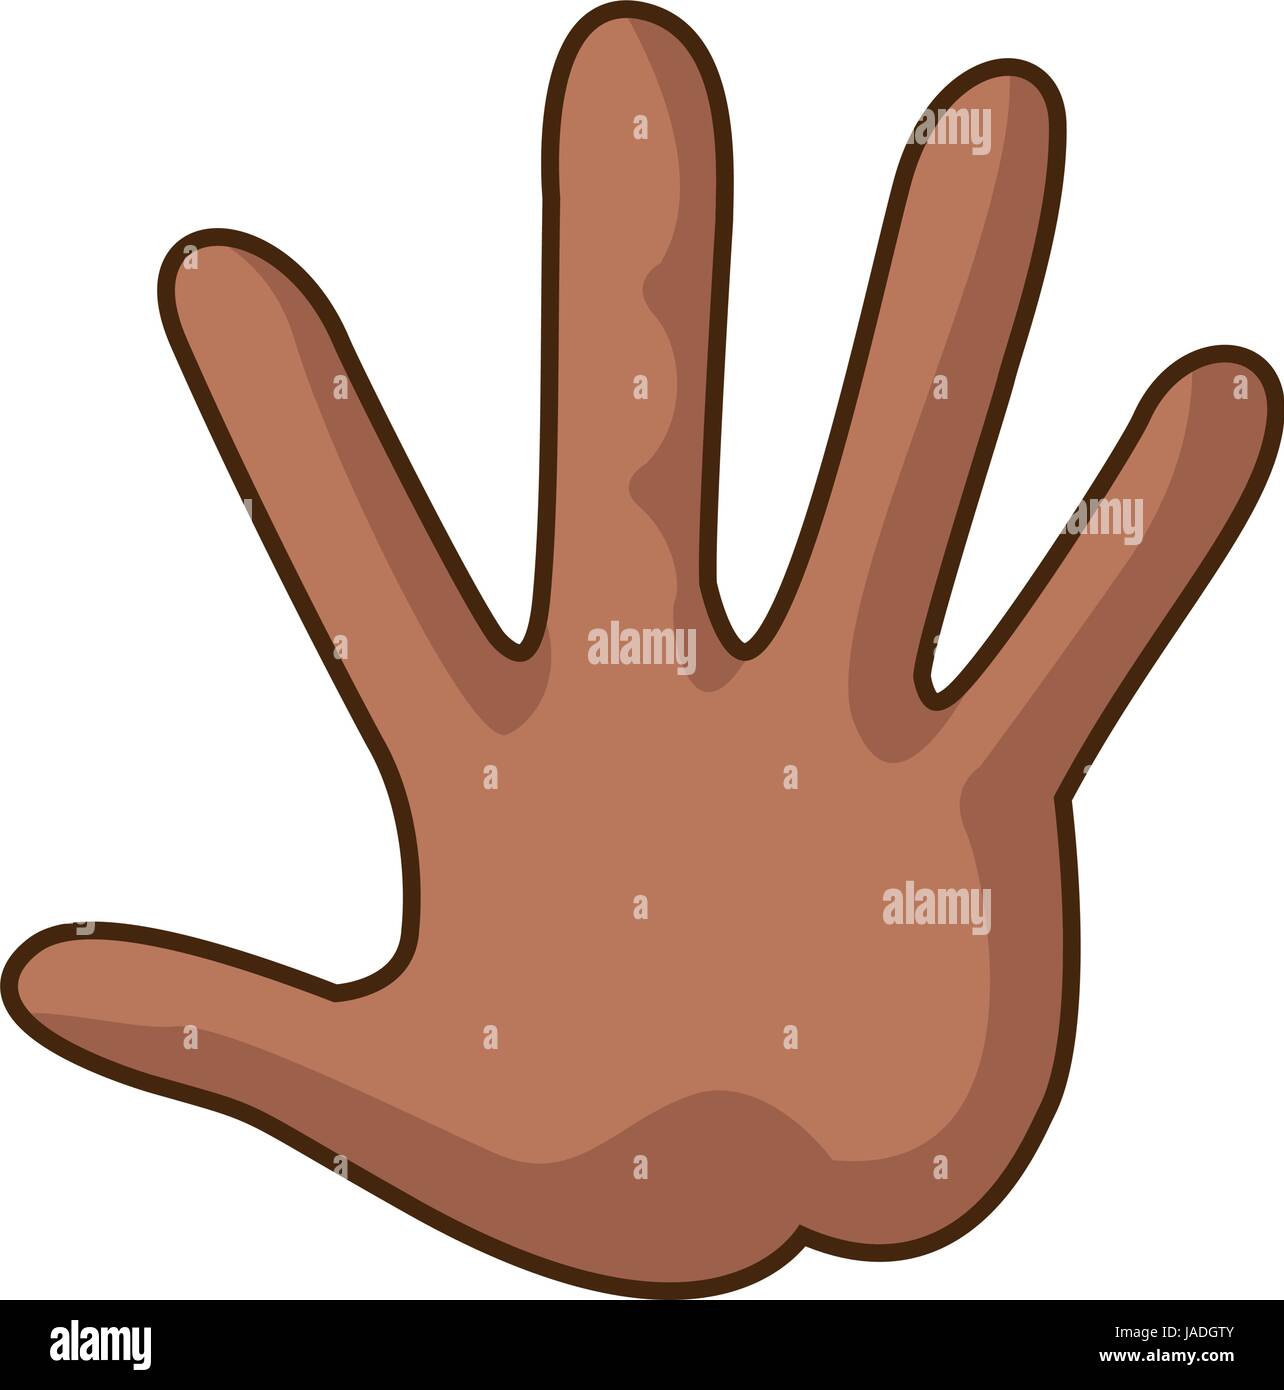 cartoon hand showing the five fingers vector illustration Stock Vector